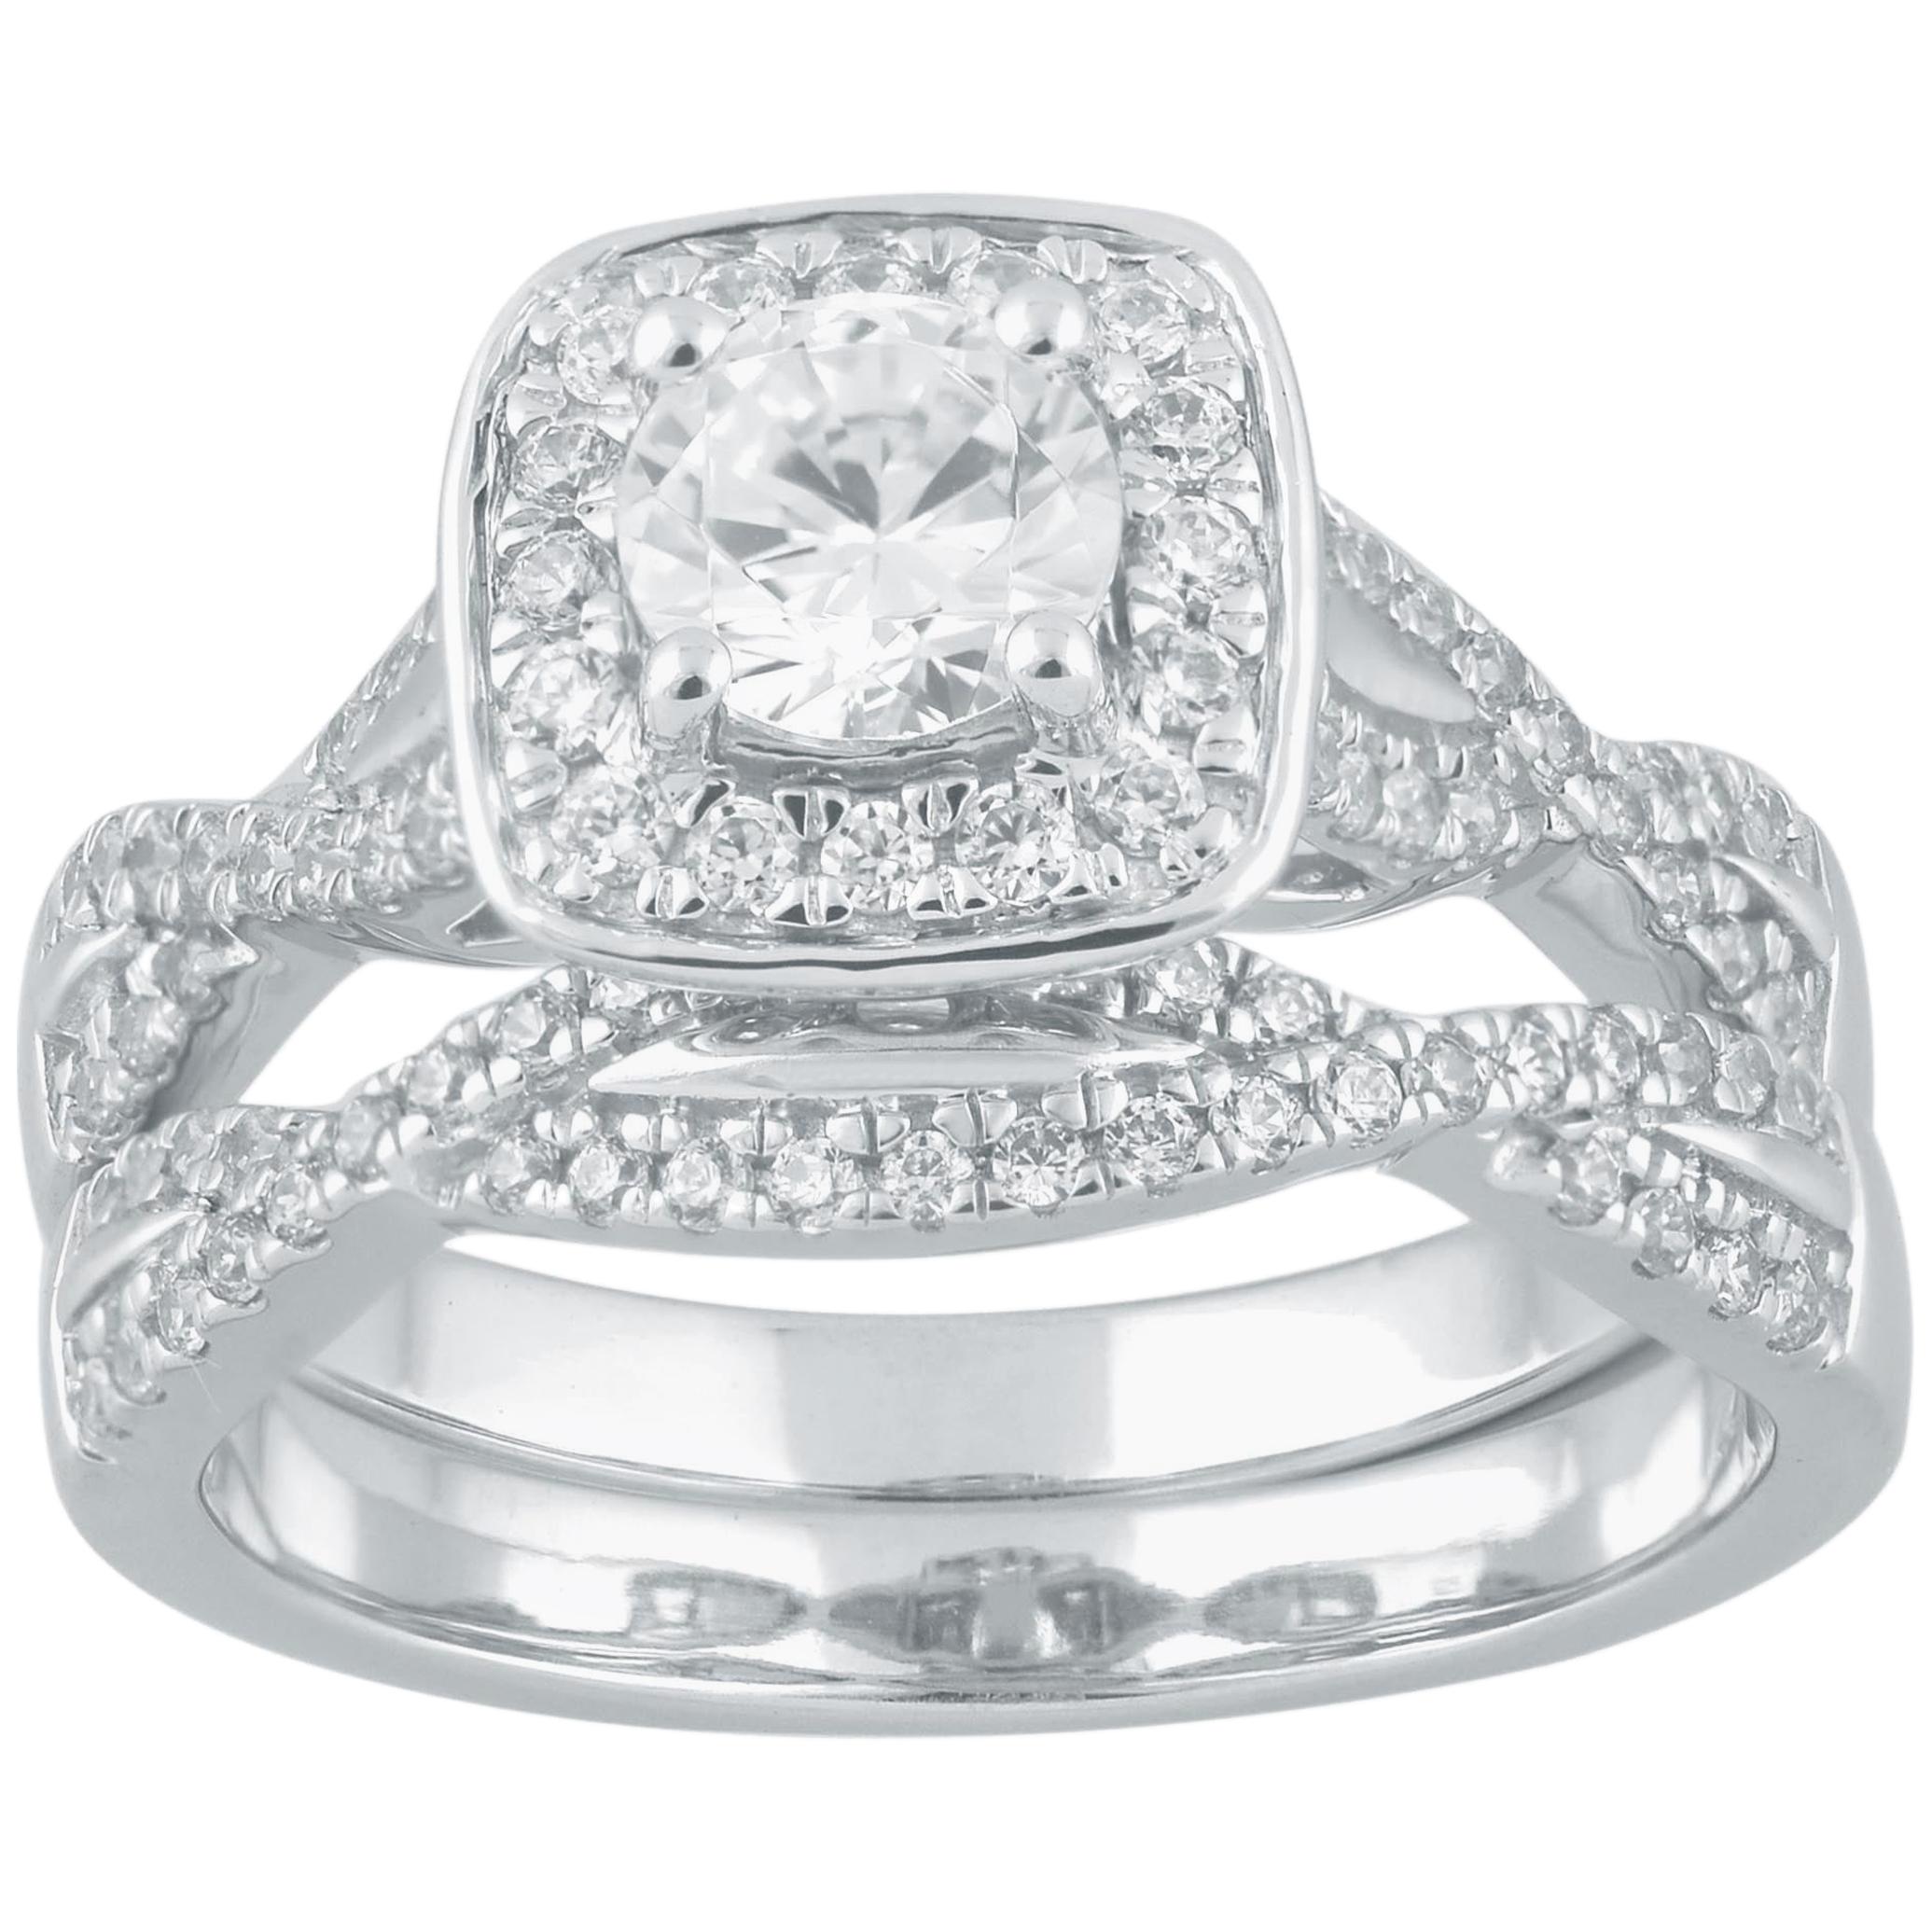 TJD 1.0 Carat Round Diamond 18 Karat White Gold Twisted Shank Bridal Ring Set For Sale